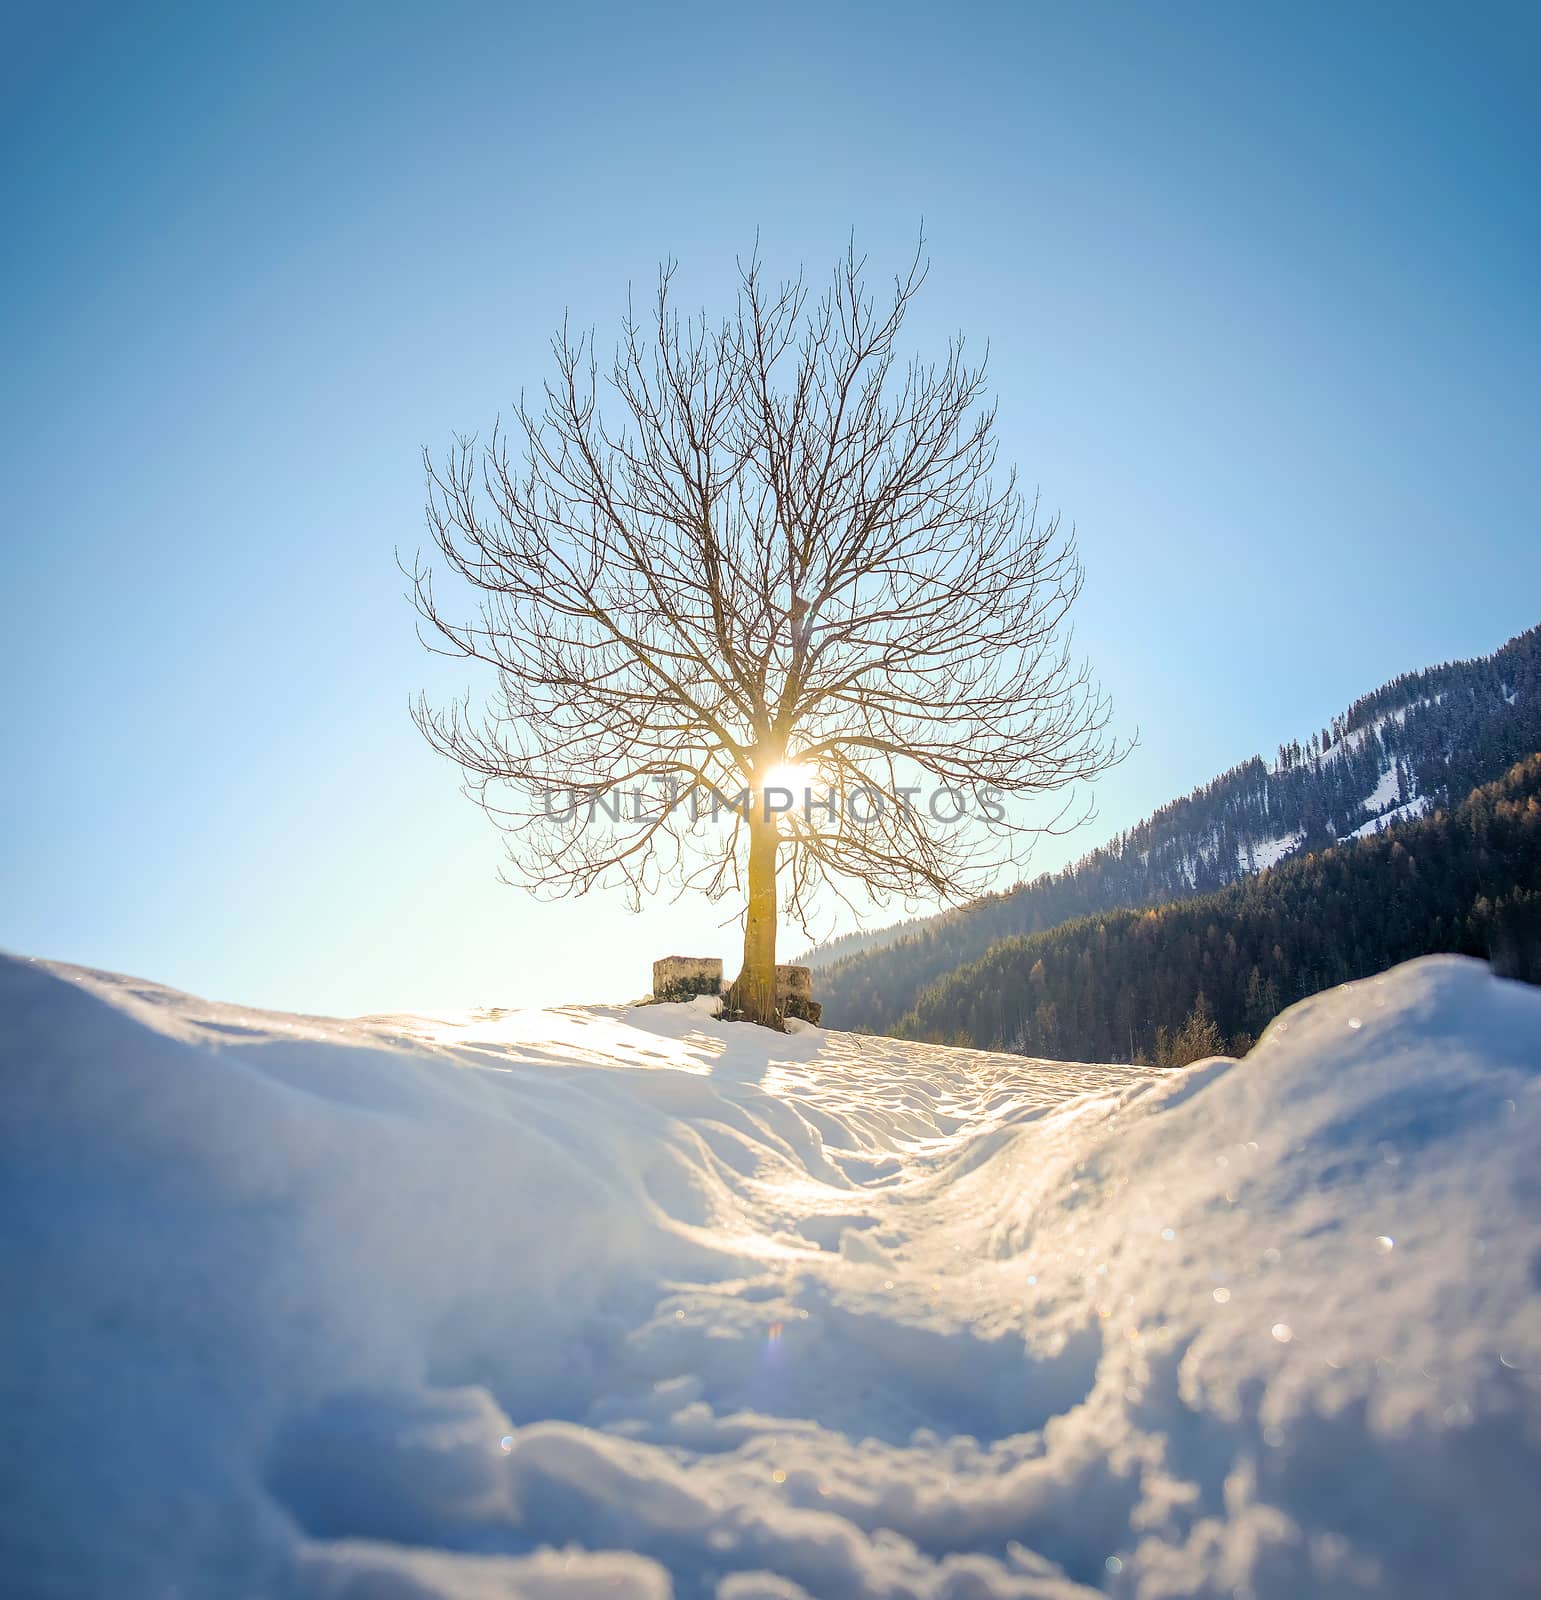 pov snow tree silhouette backlight through branches .